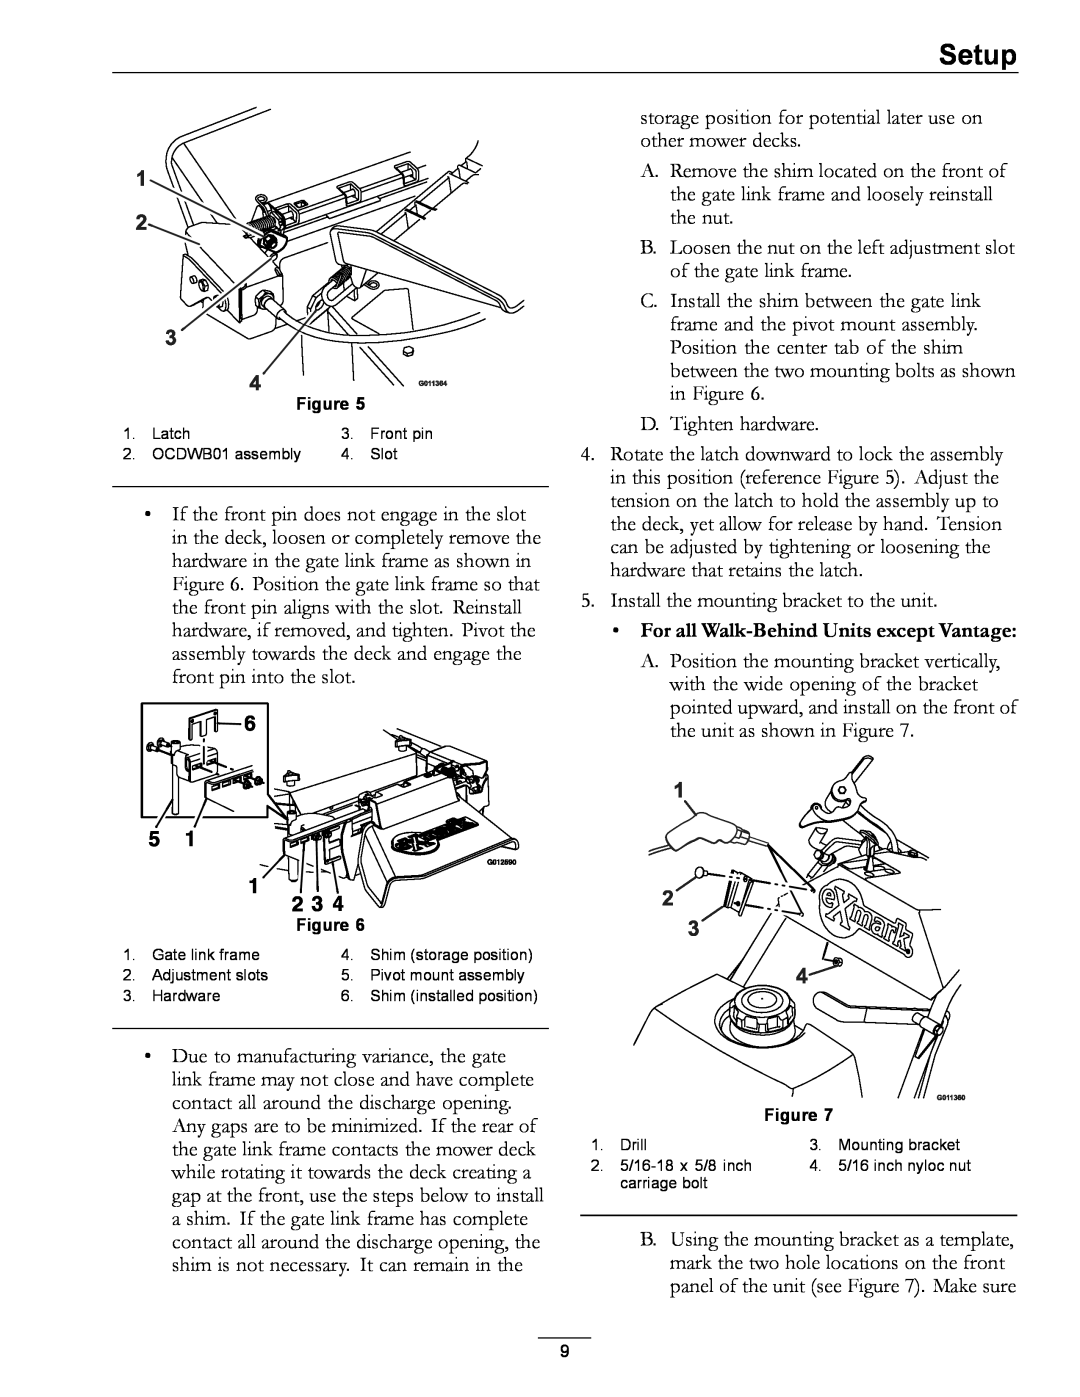 Exmark OCDWB01 manual For all Walk-Behind Units except Vantage, Setup, D. Tighten hardware 